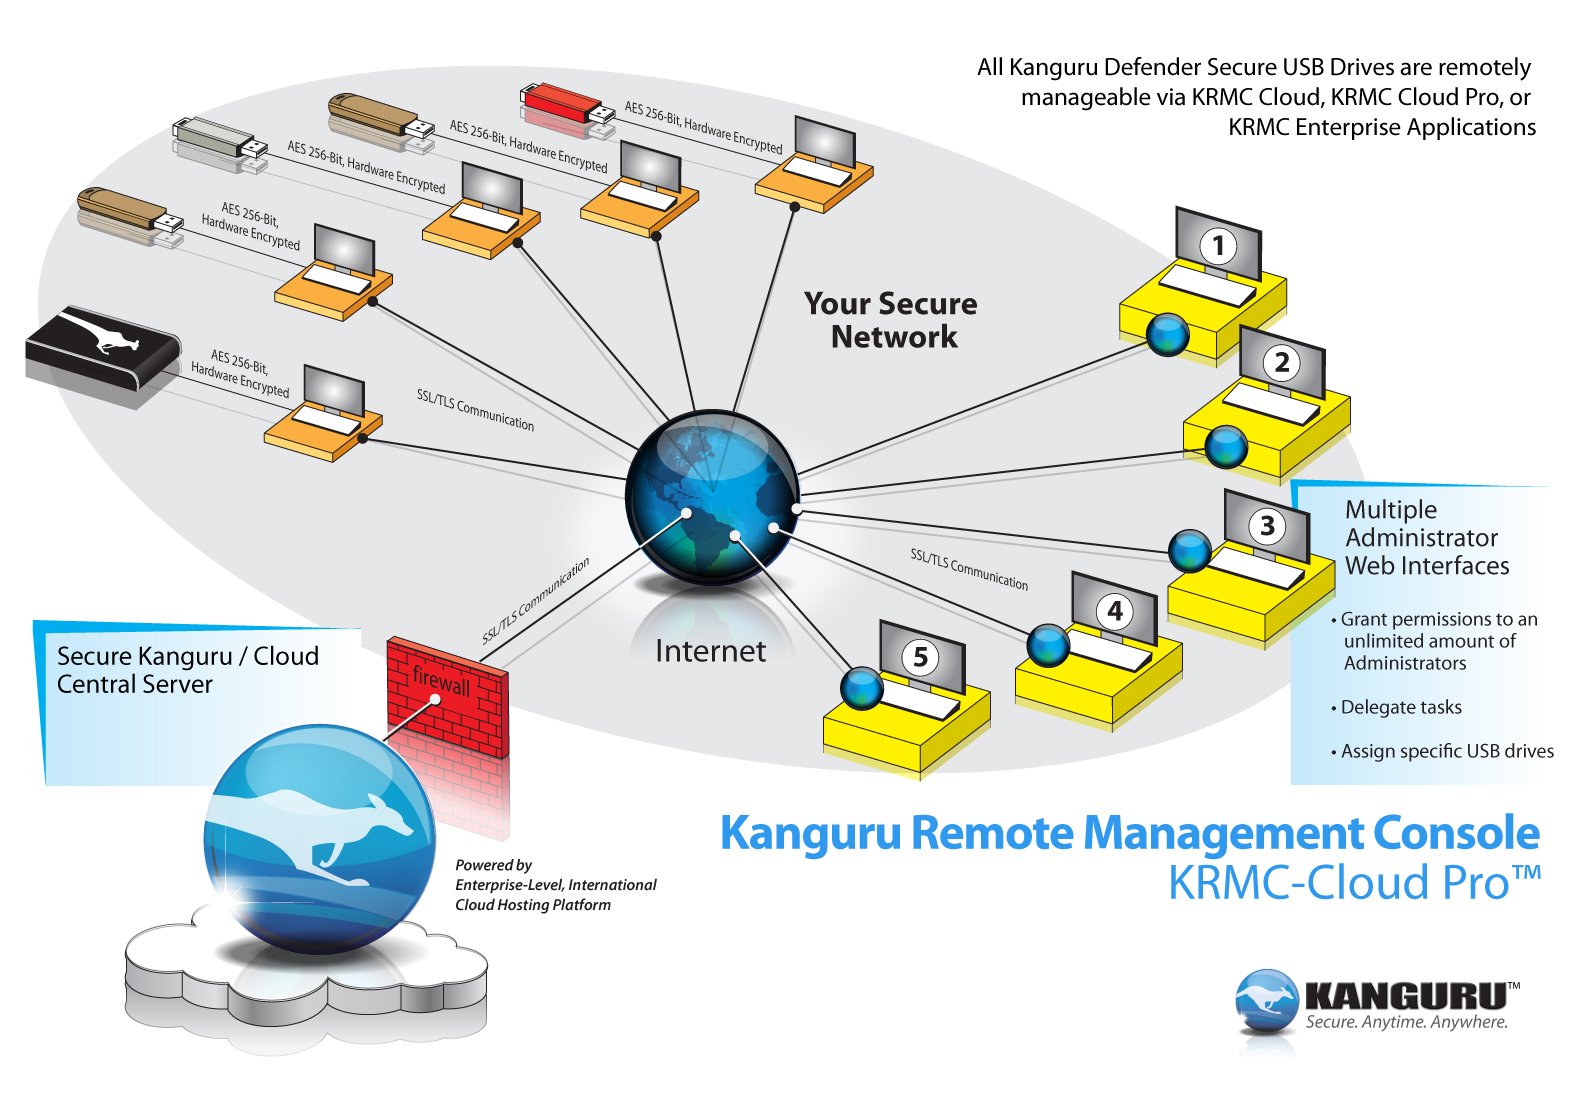 Kanguru Remote Management Console - Cloud Pro Edition